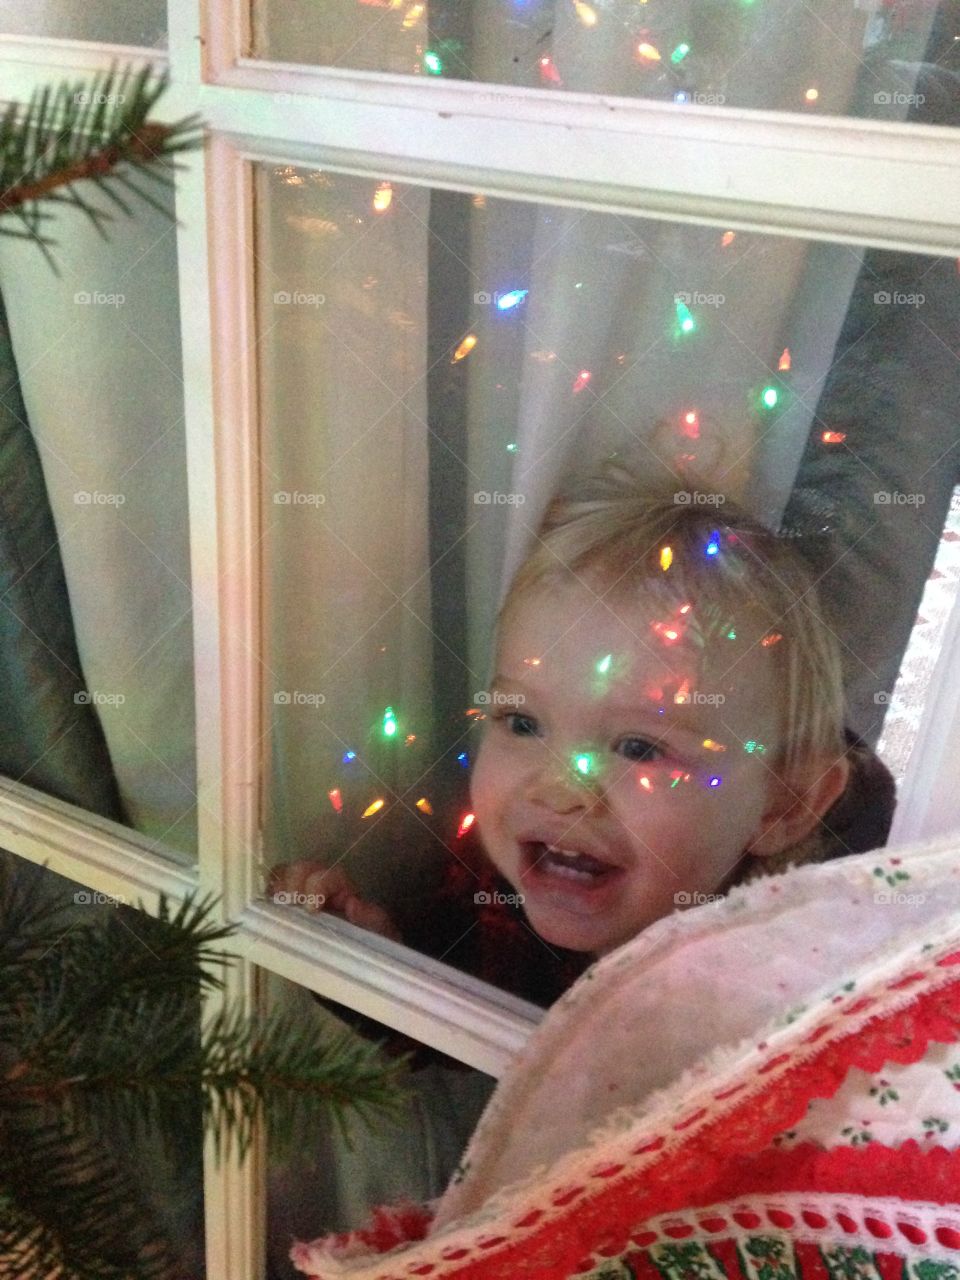 Little boy looking through the glass window